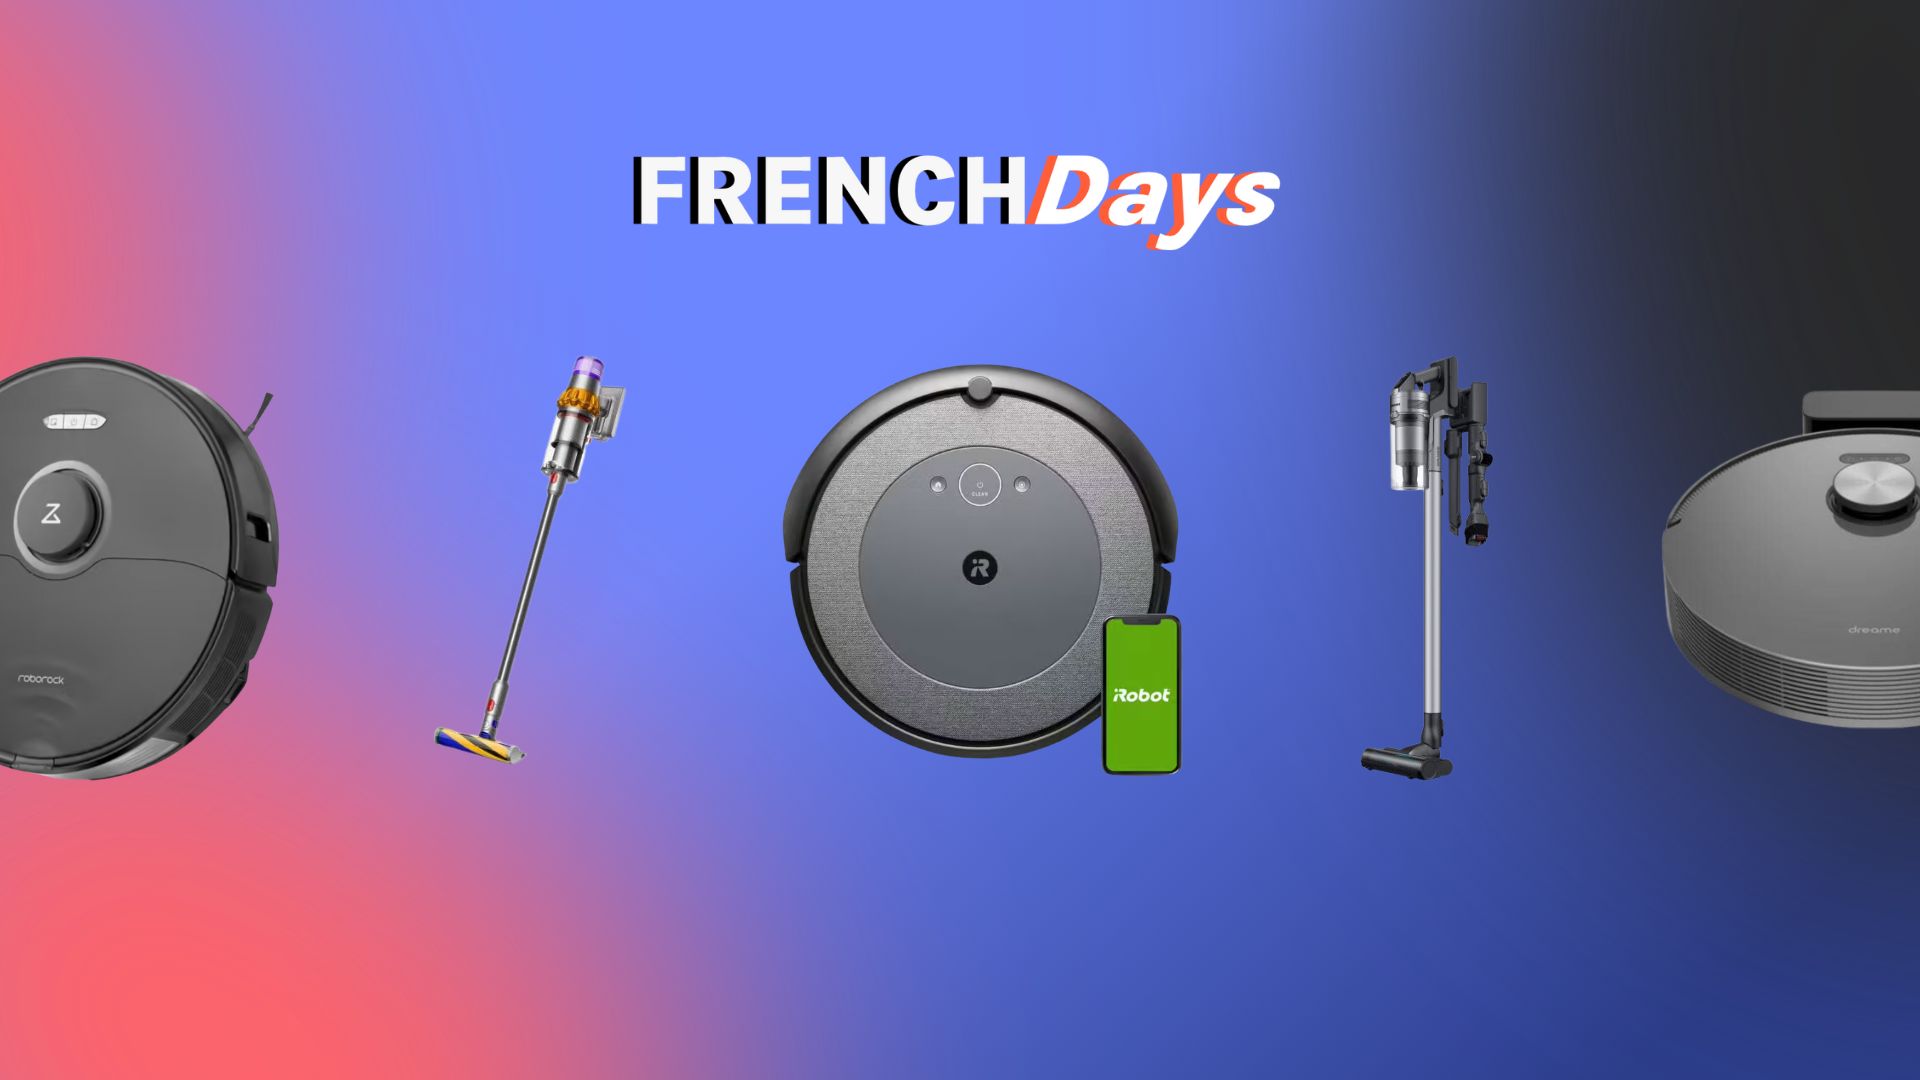 French Days : bon plan Karchers au meilleur prix pour mieux